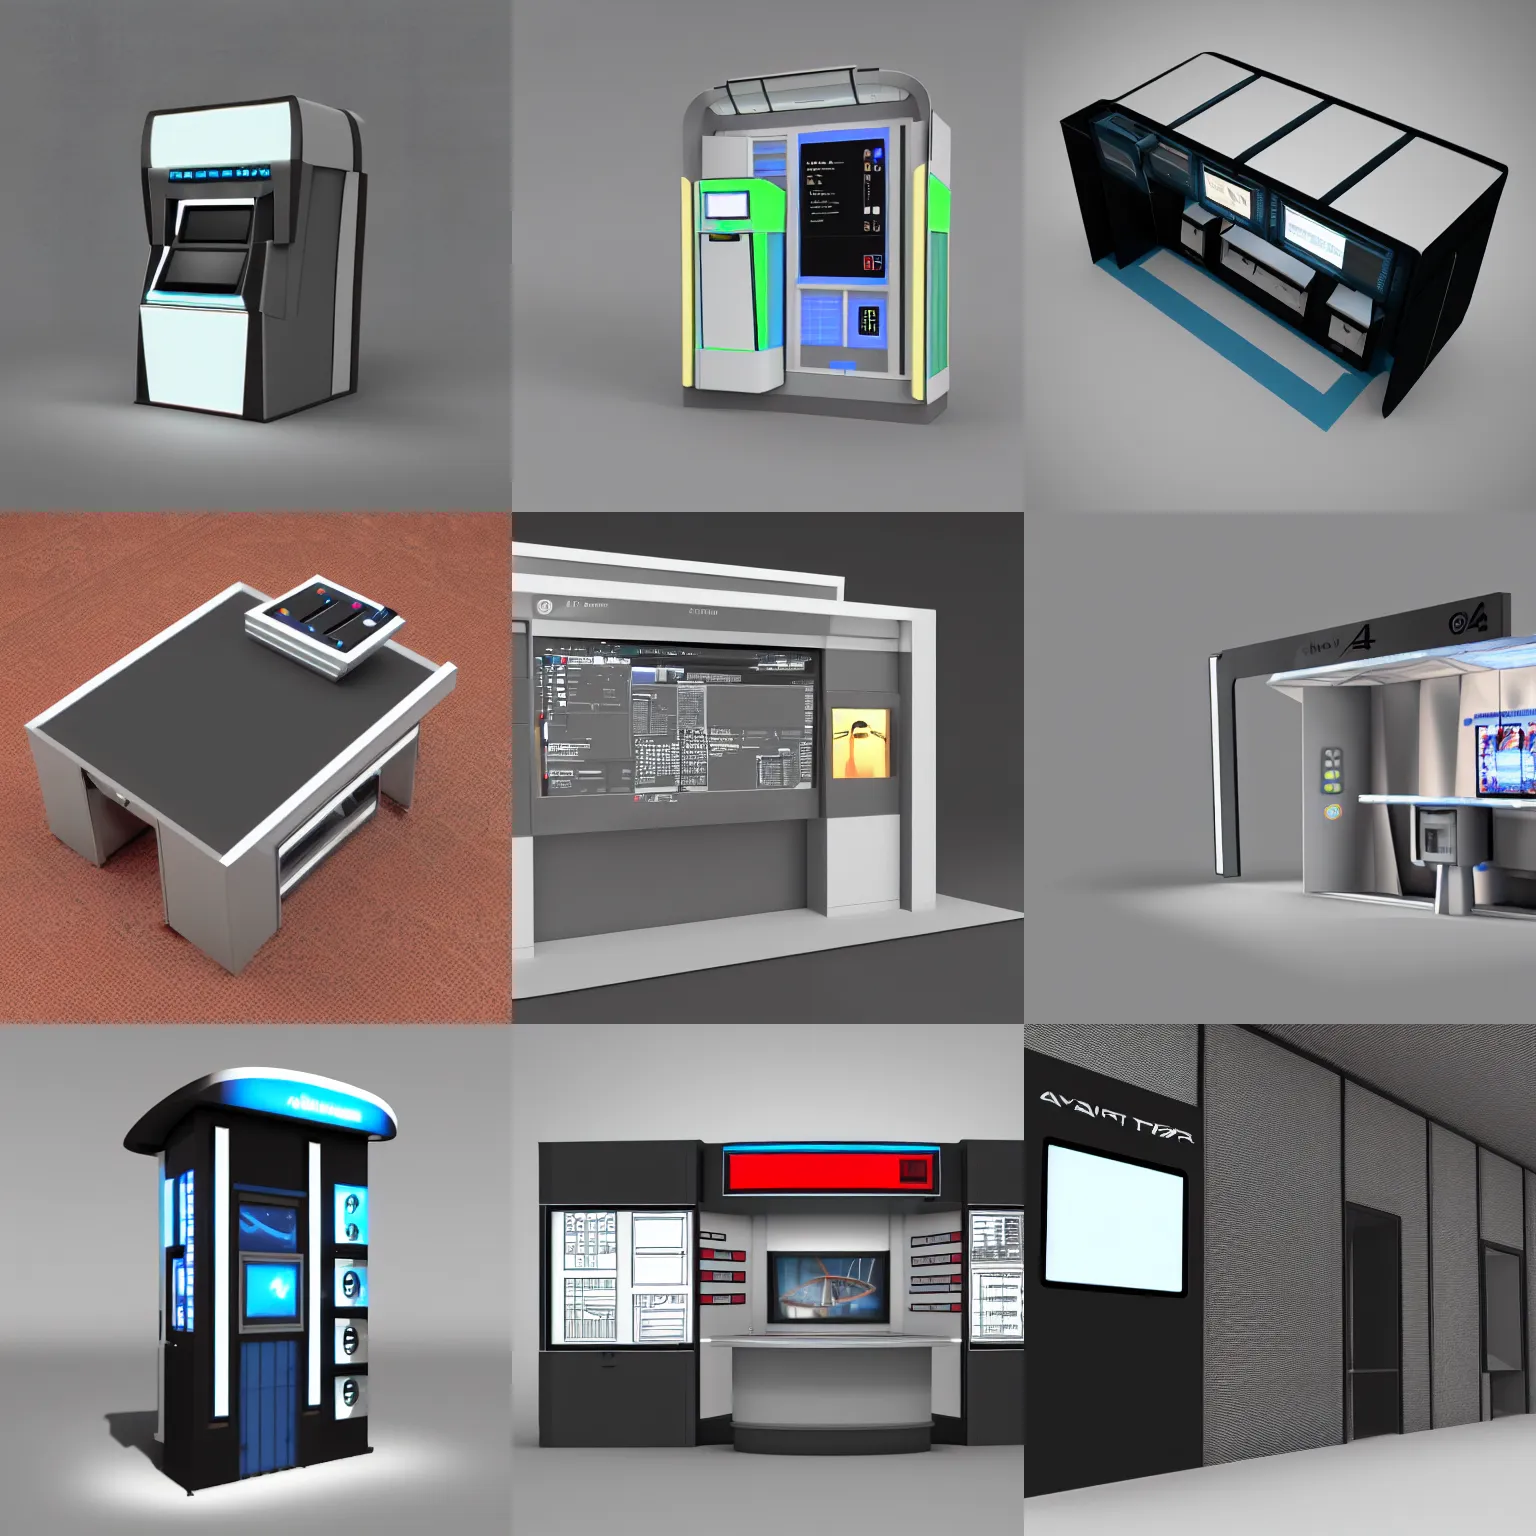 Prompt: industrial design of an Avatar-like kiosk cinema4d render